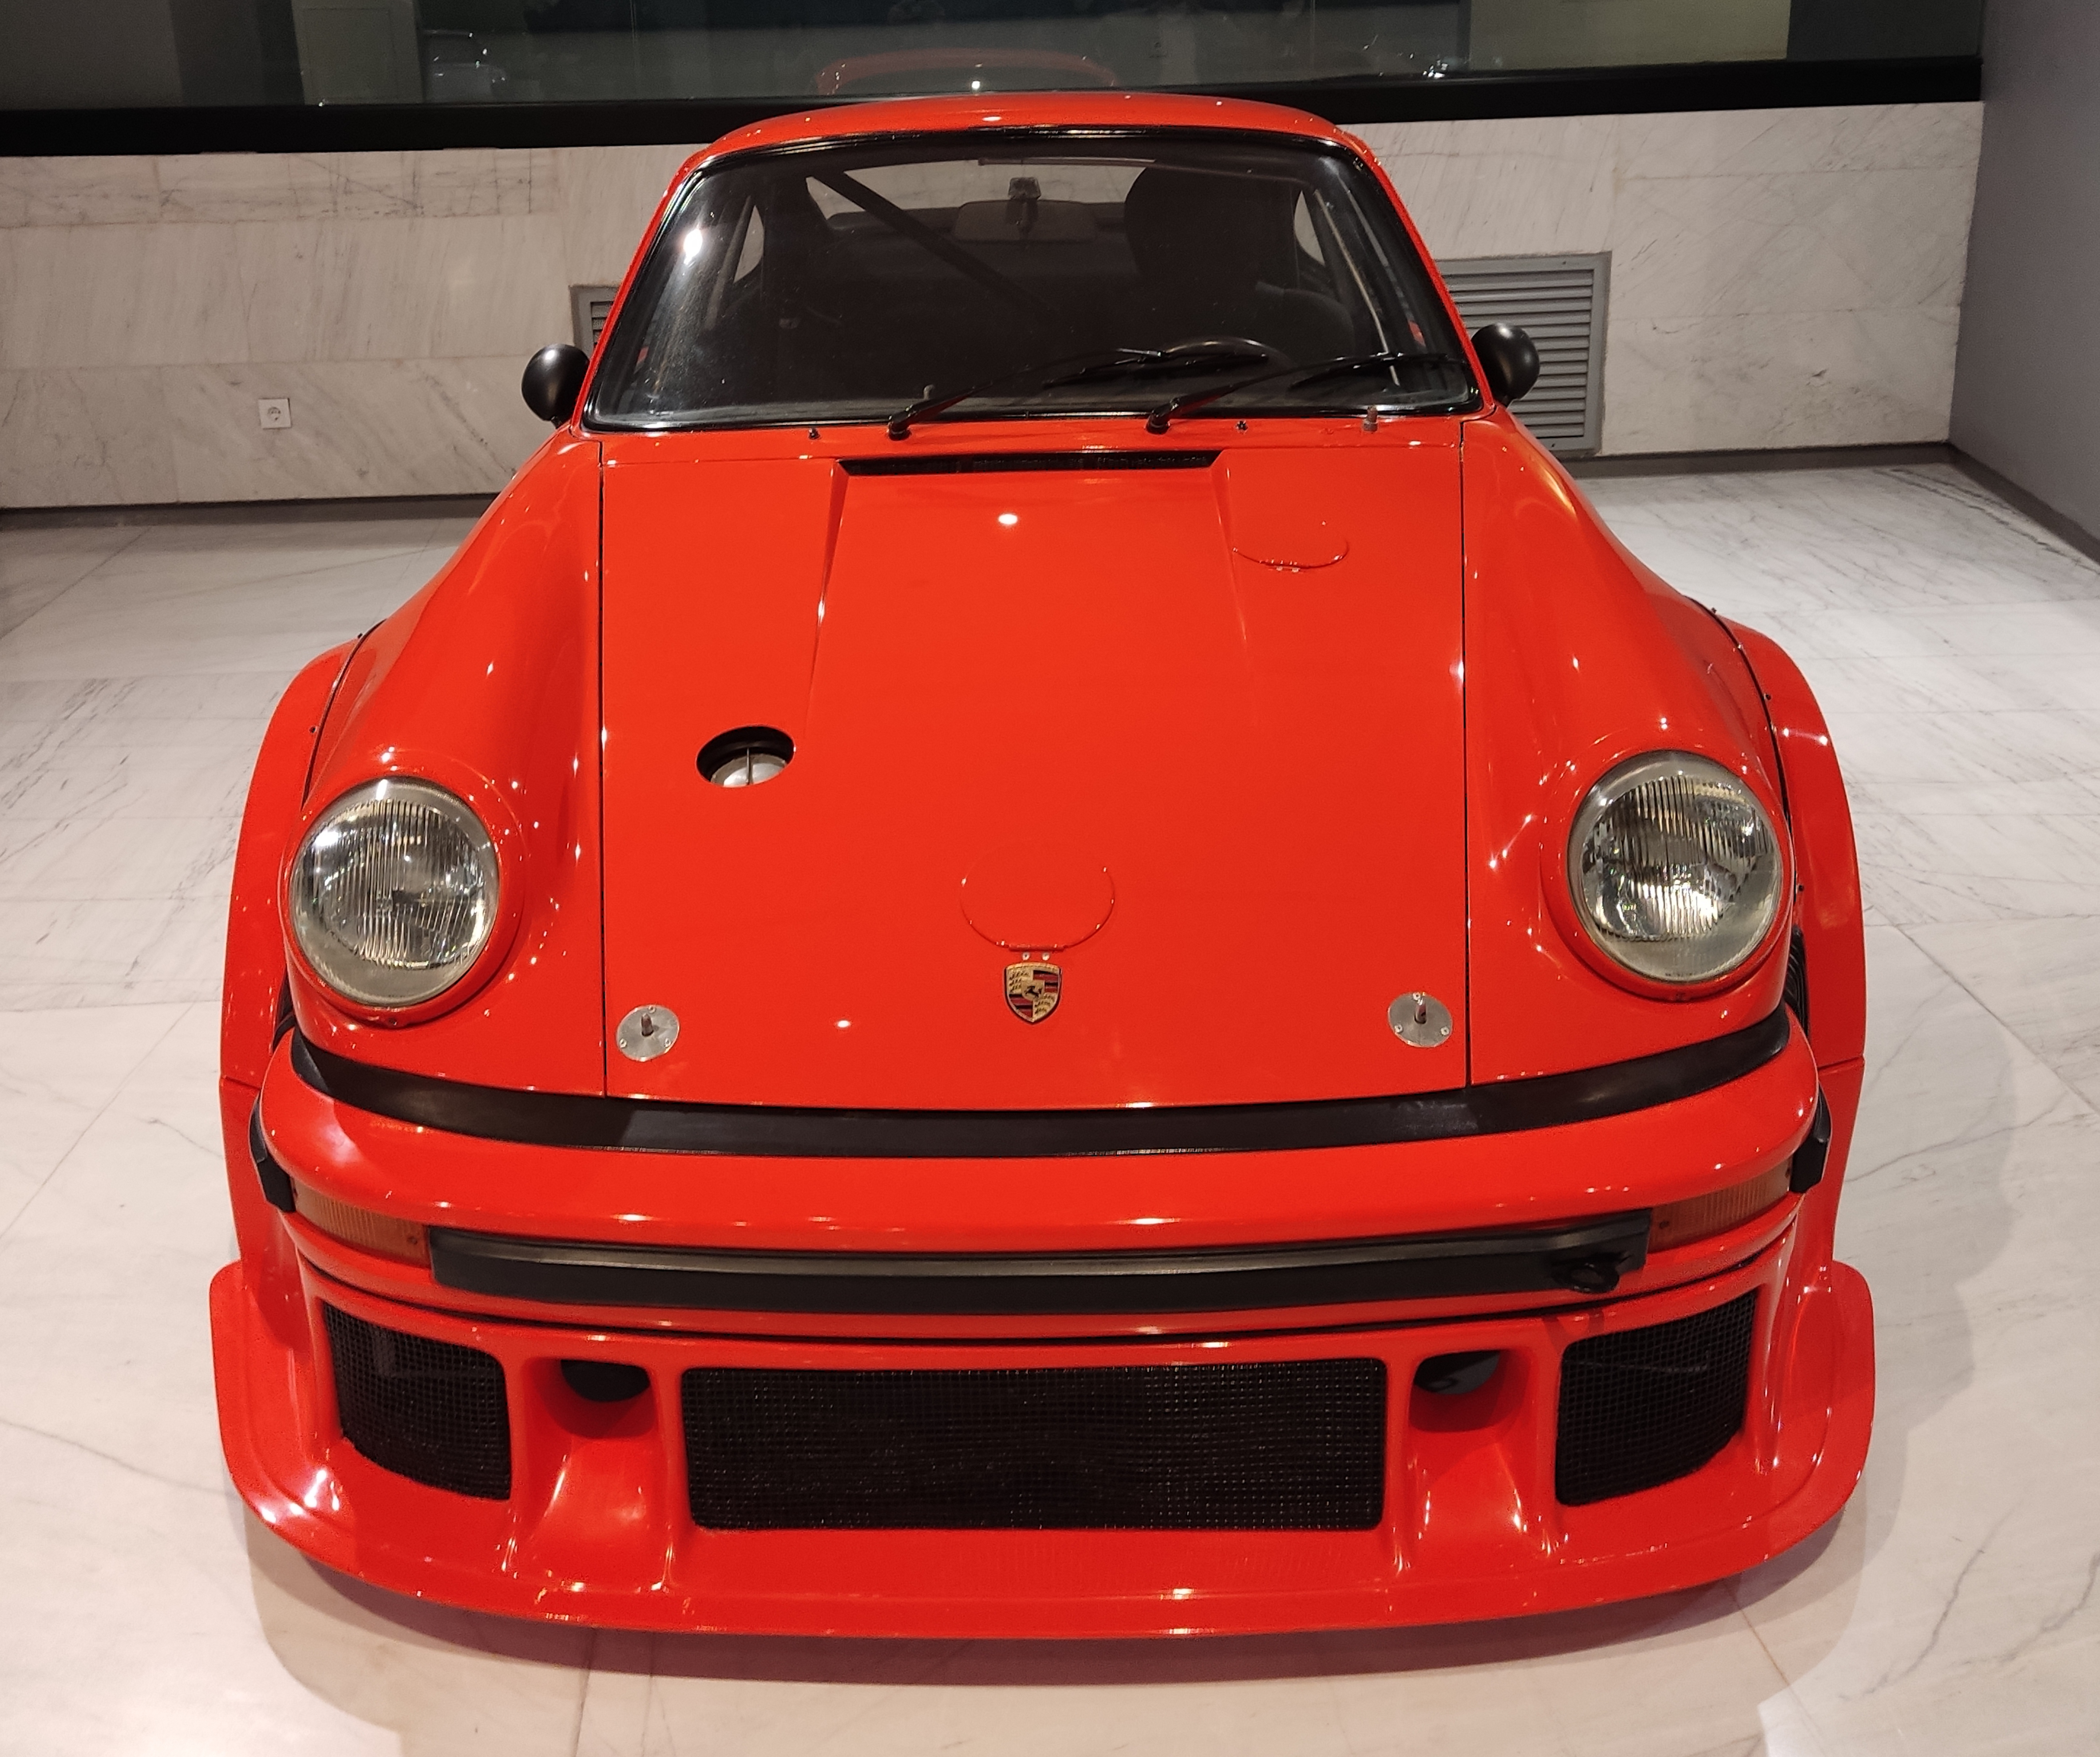 Porsche 934 - Wikipedia